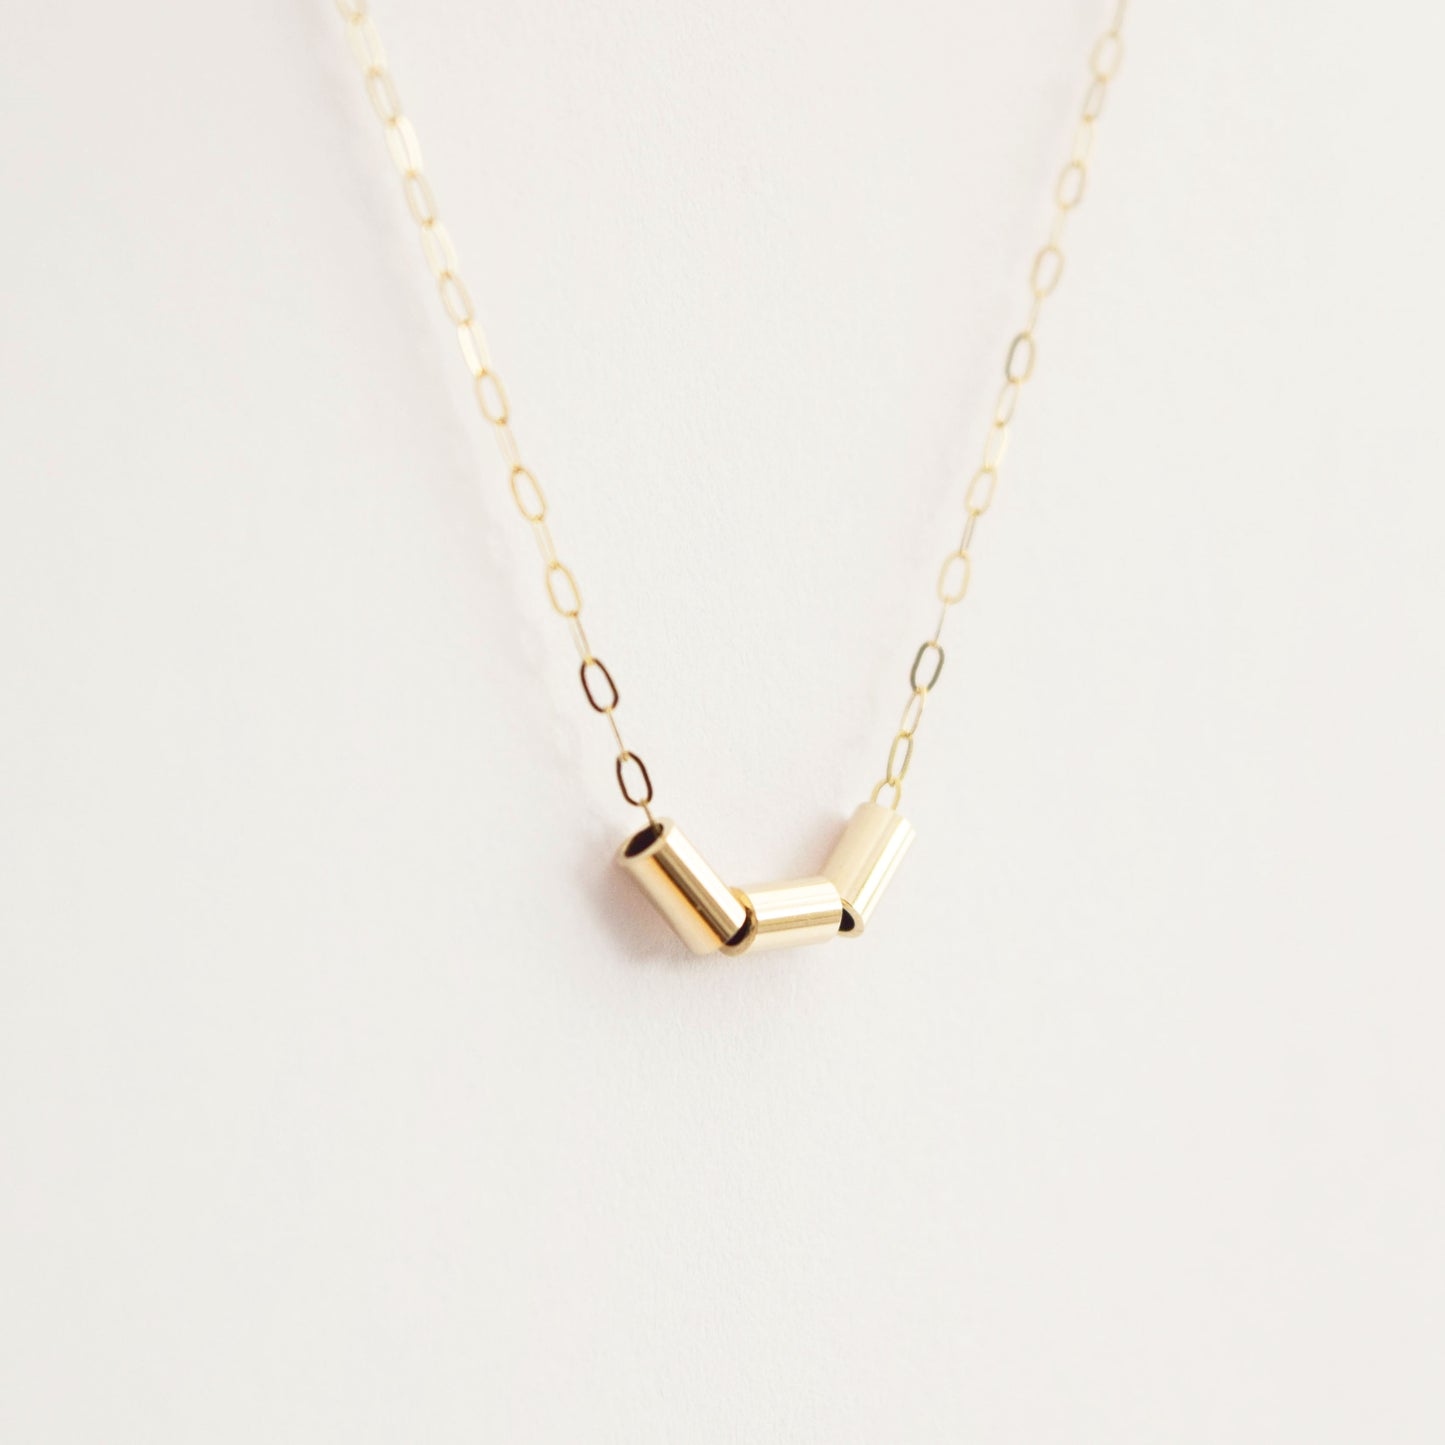 MUKA studio gold nugget necklace hanging on white background